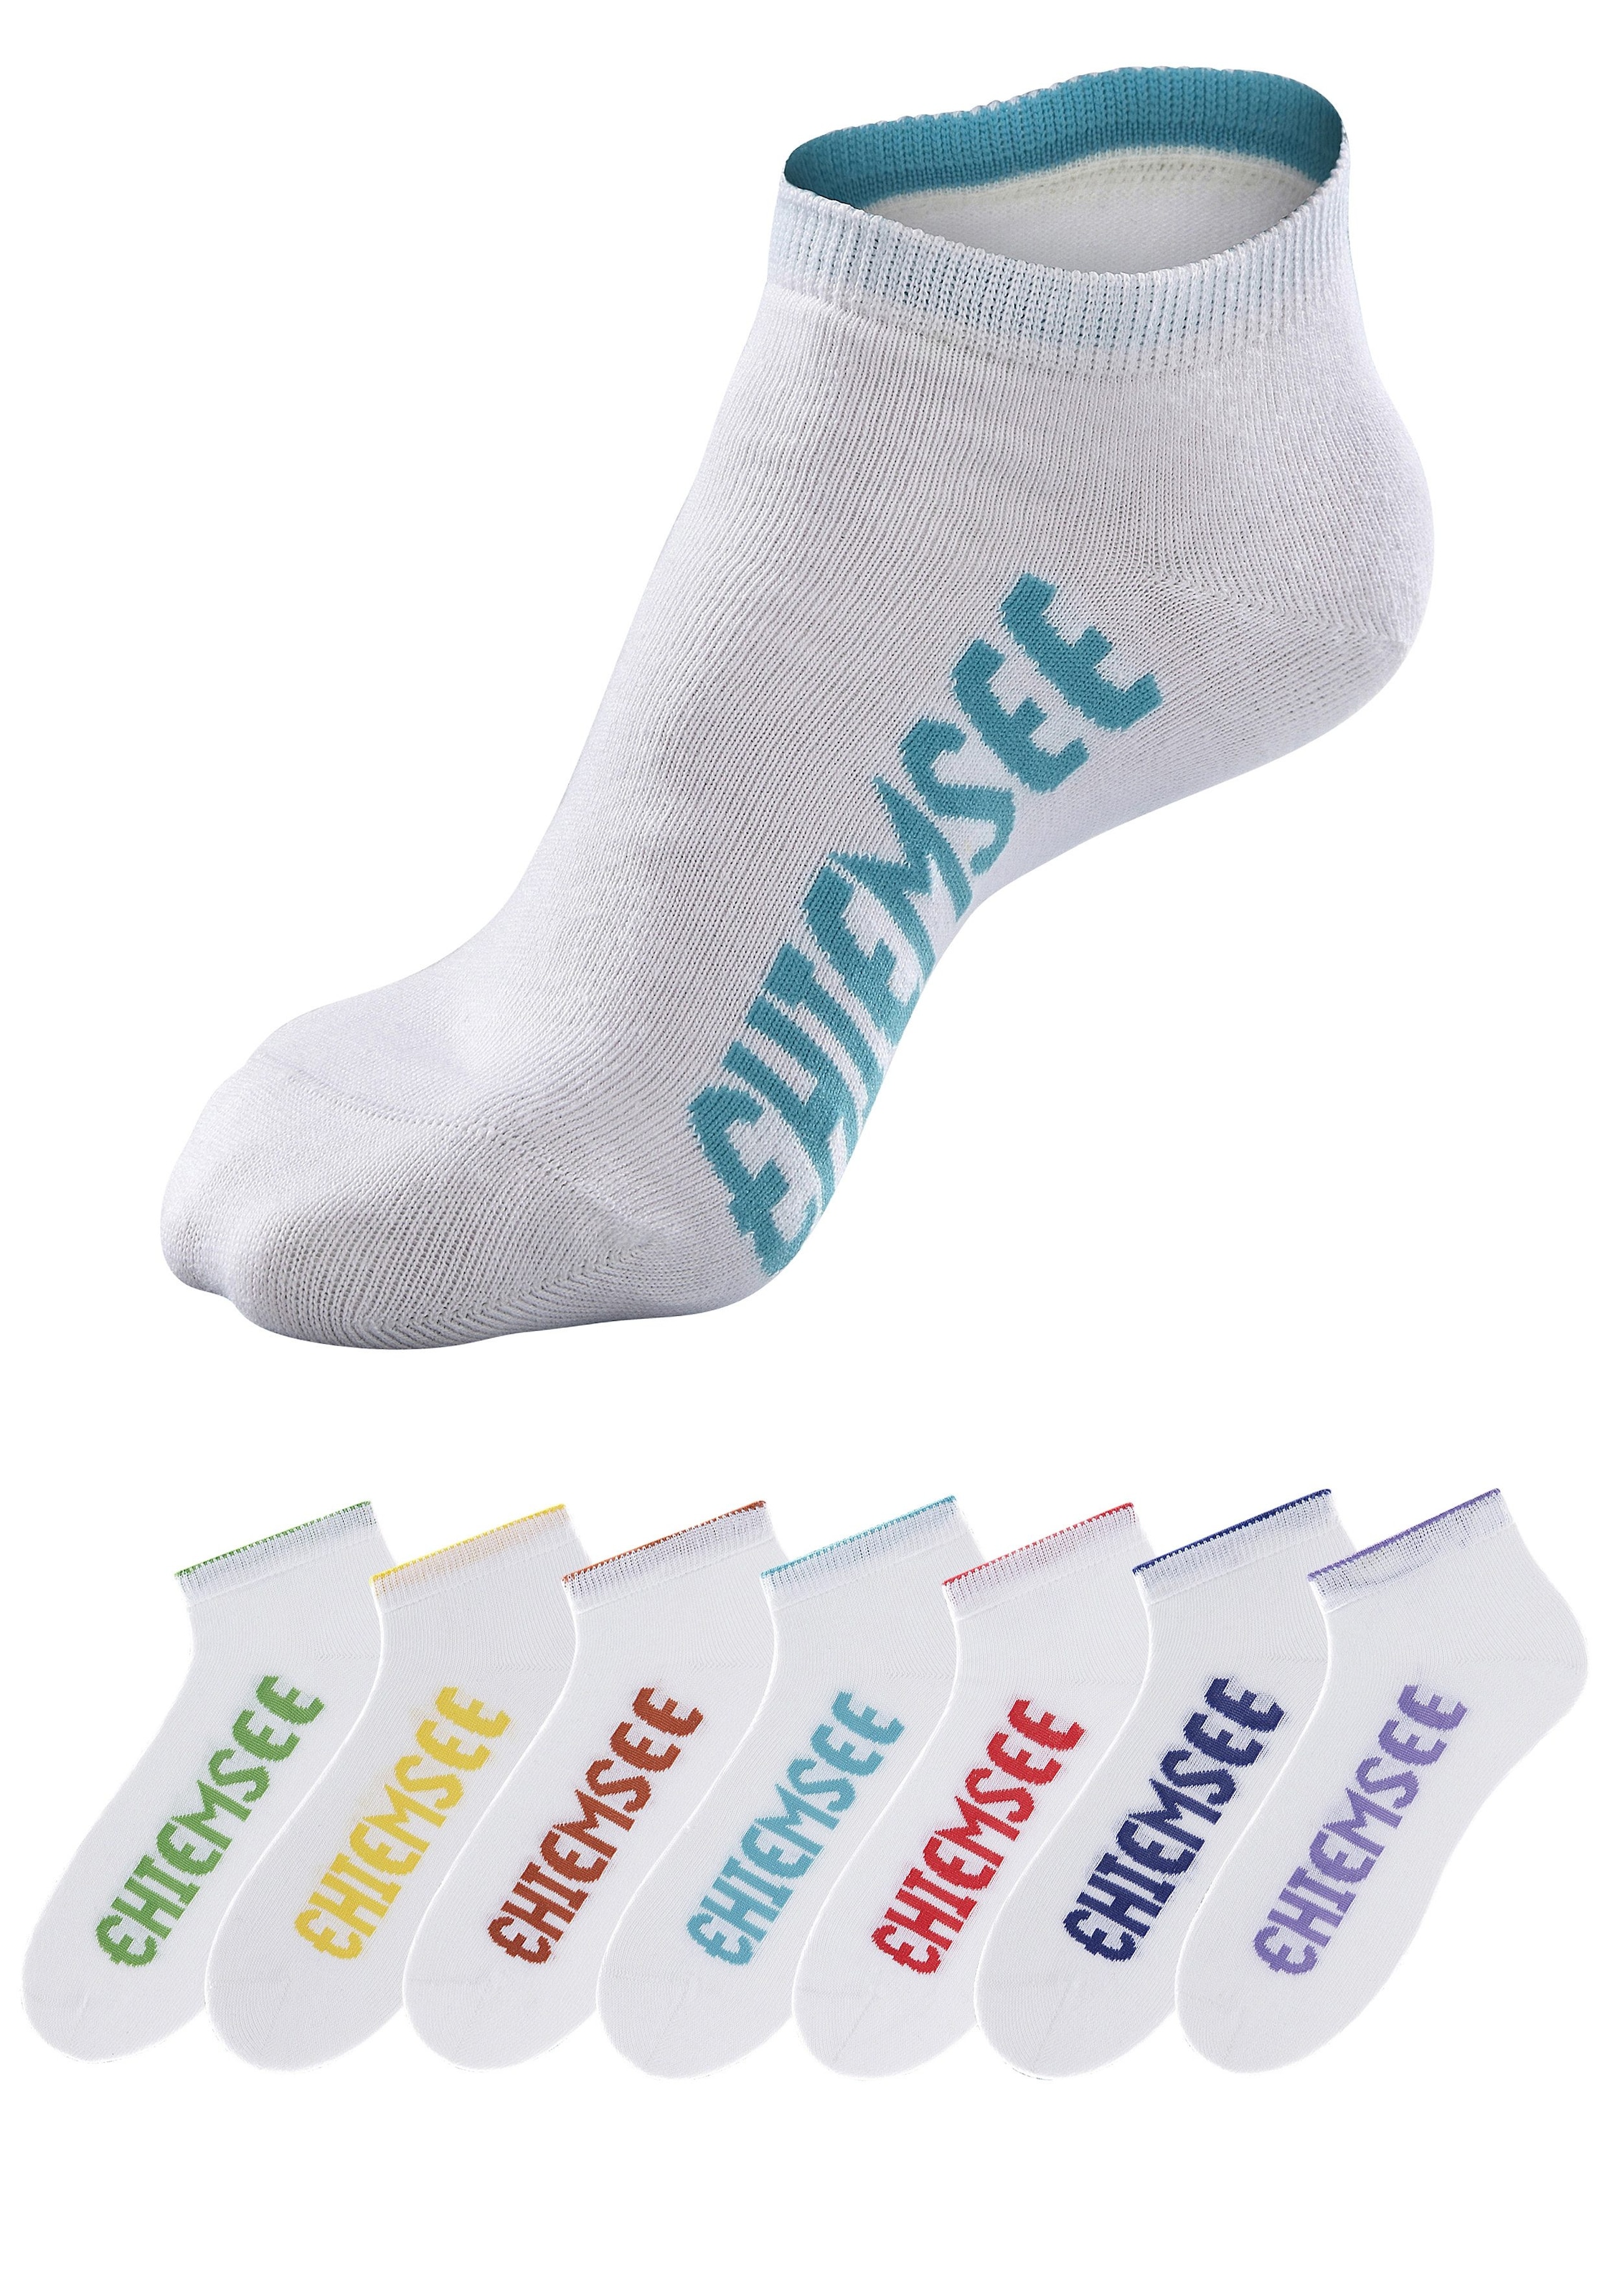 Chiemsee Sneakersocken, bei Logos 7 (Set, mit Paar), farbigen